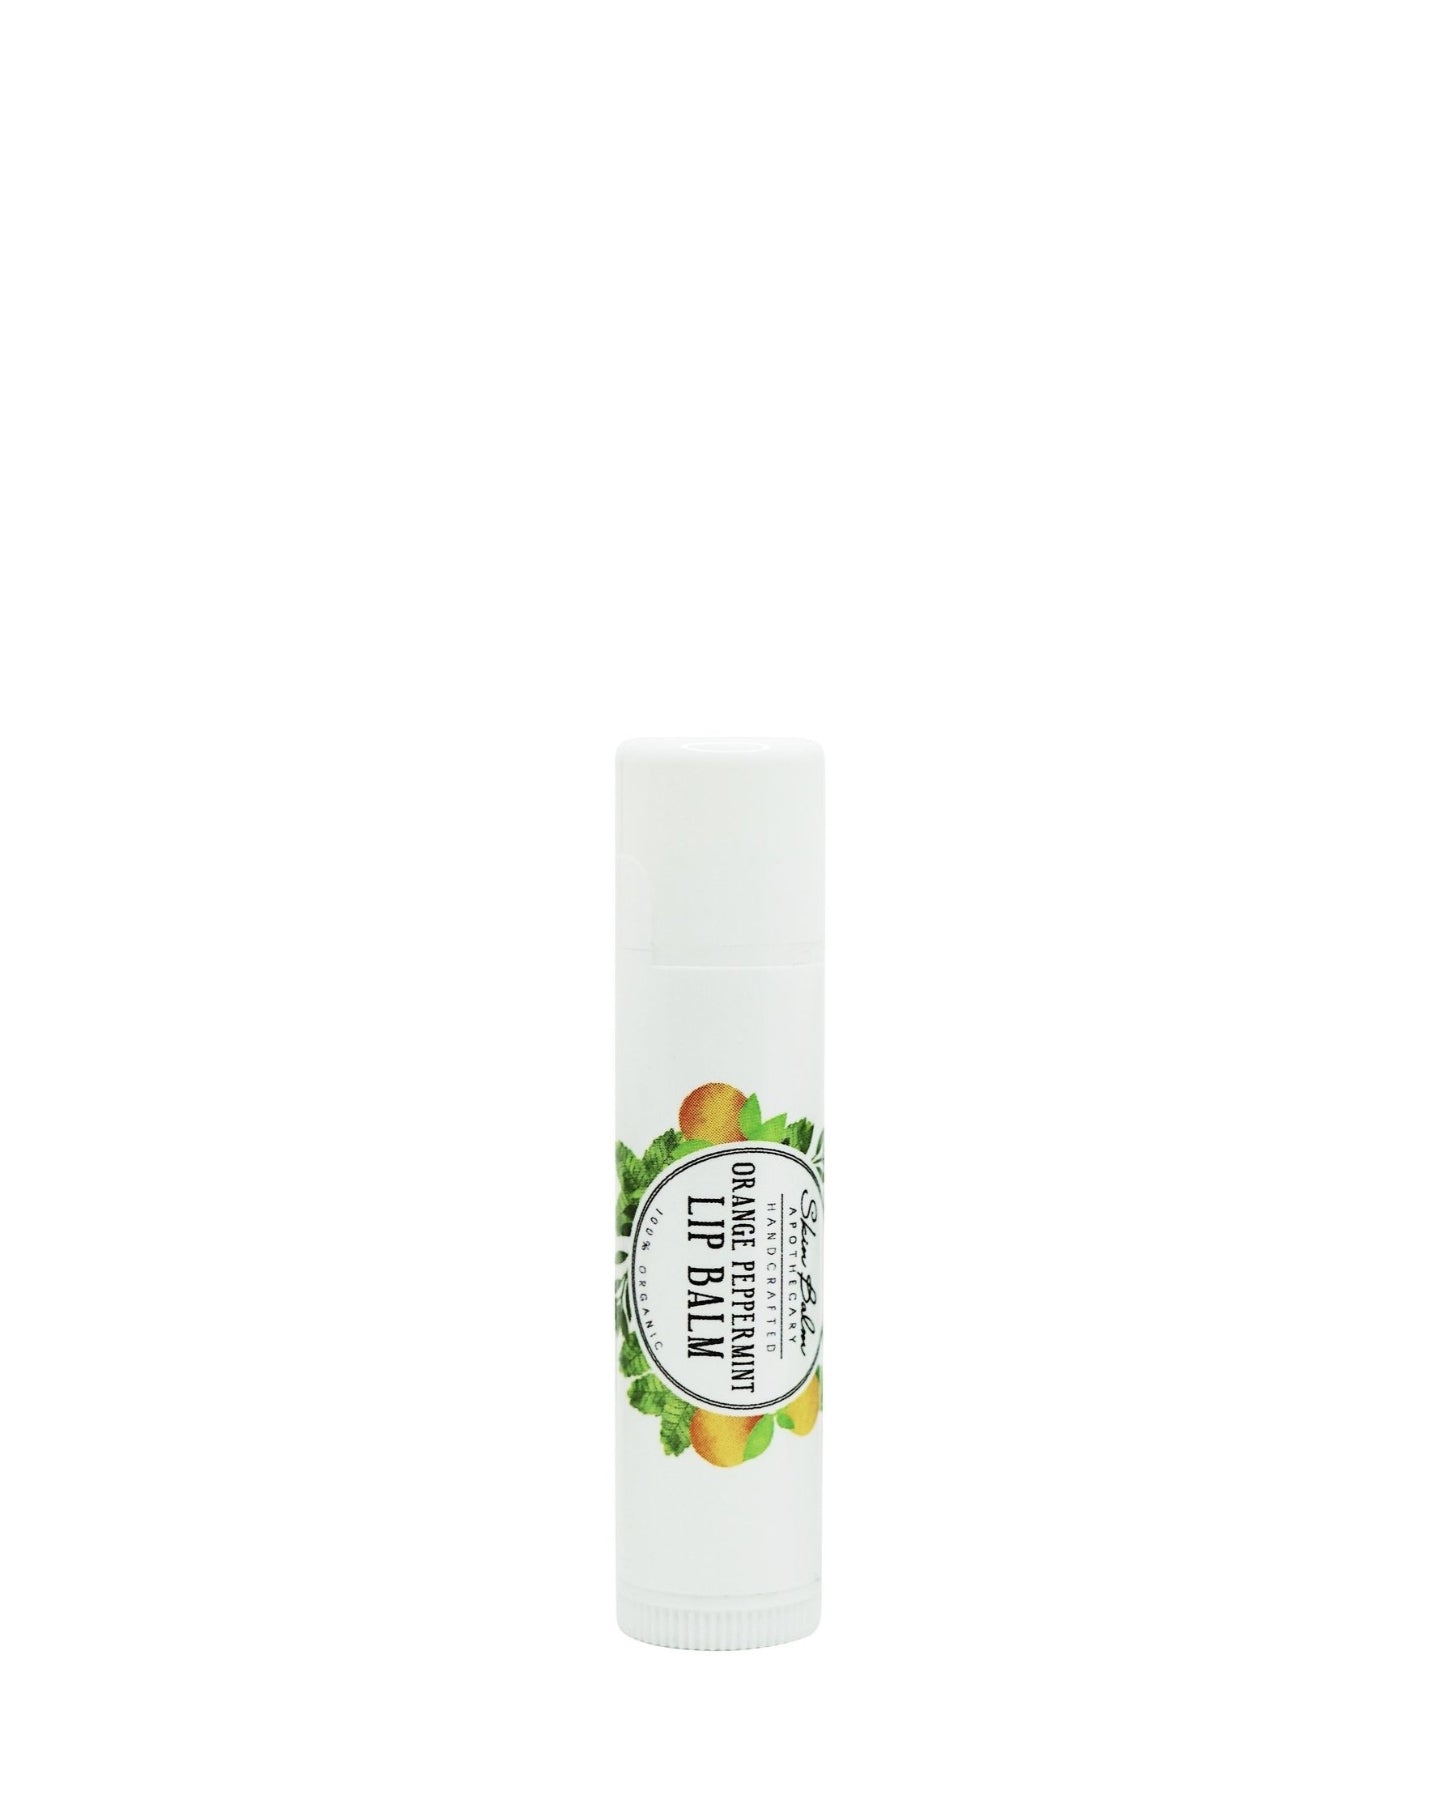 Orange Peppermint Lip Balm against a white background.